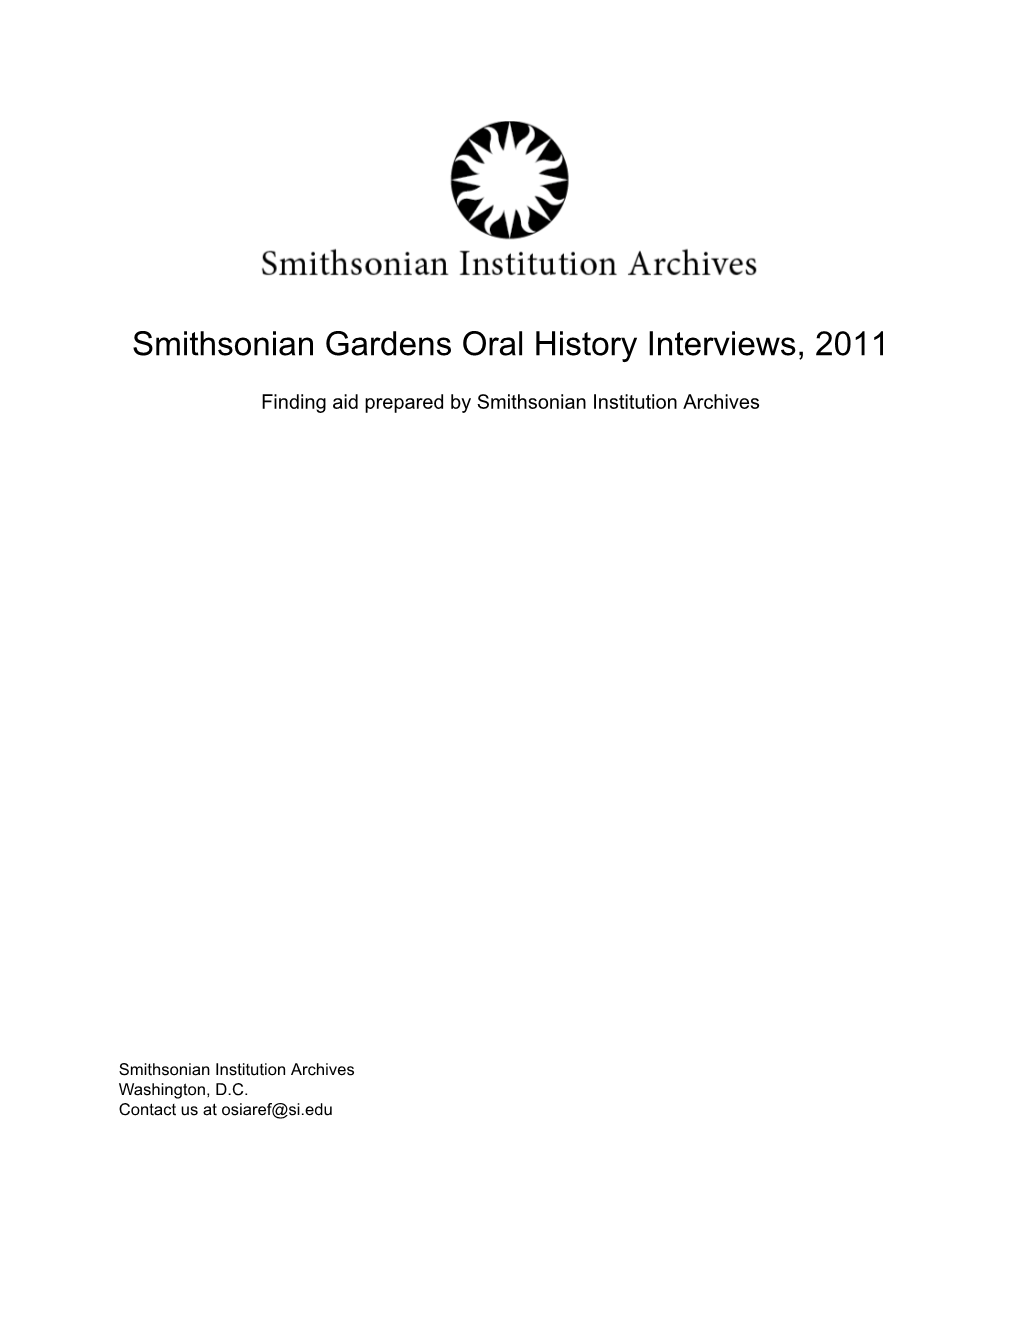 Smithsonian Gardens Oral History Interviews, 2011